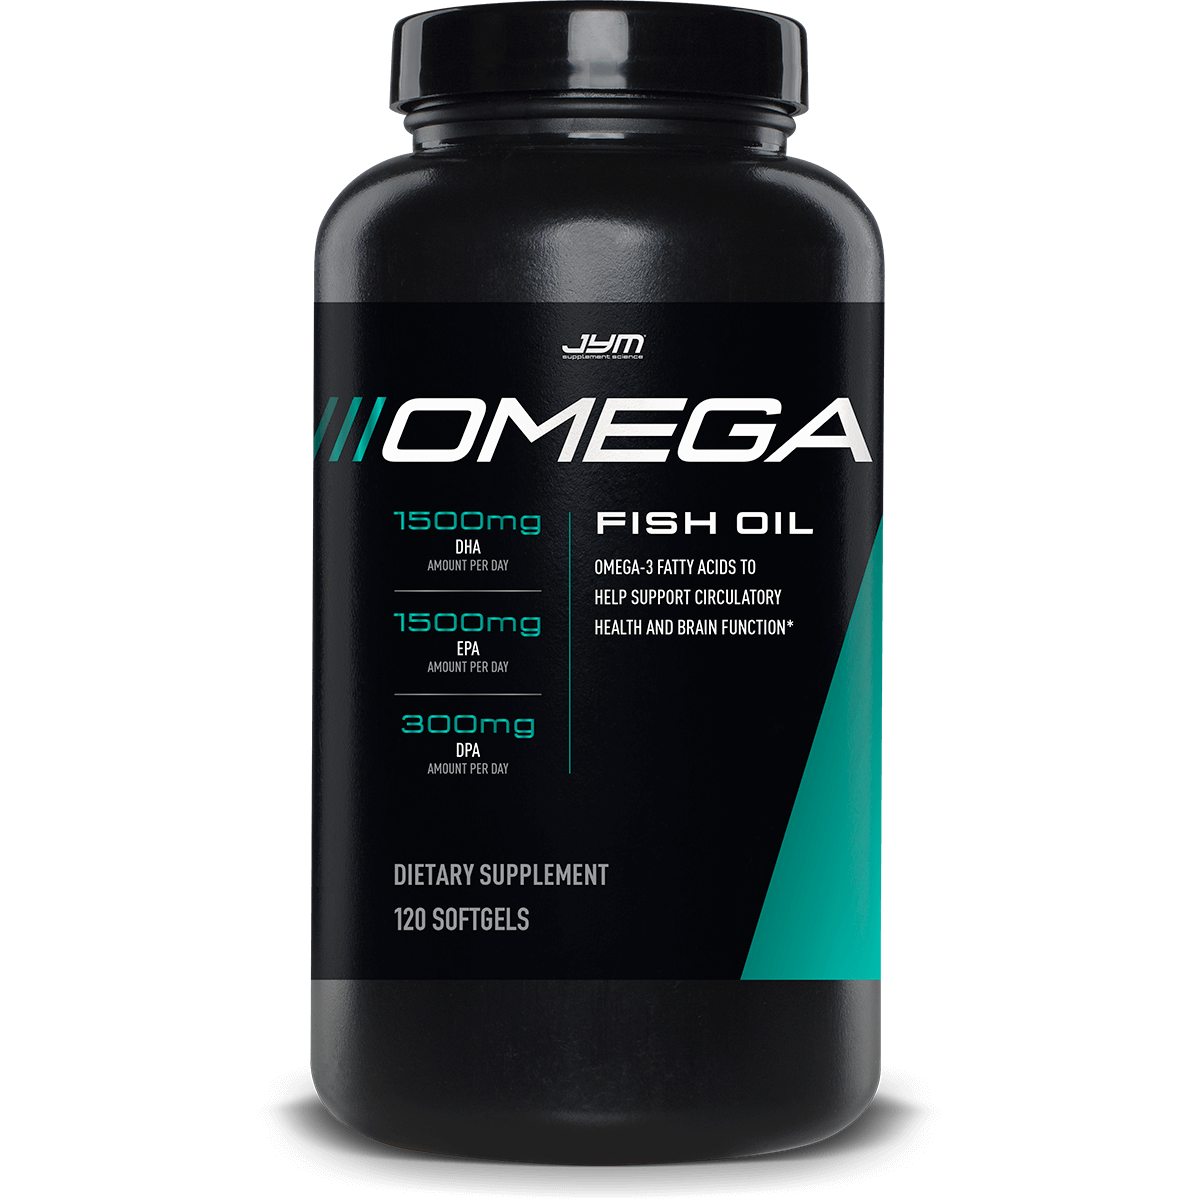 Omega JYM Fish Oil